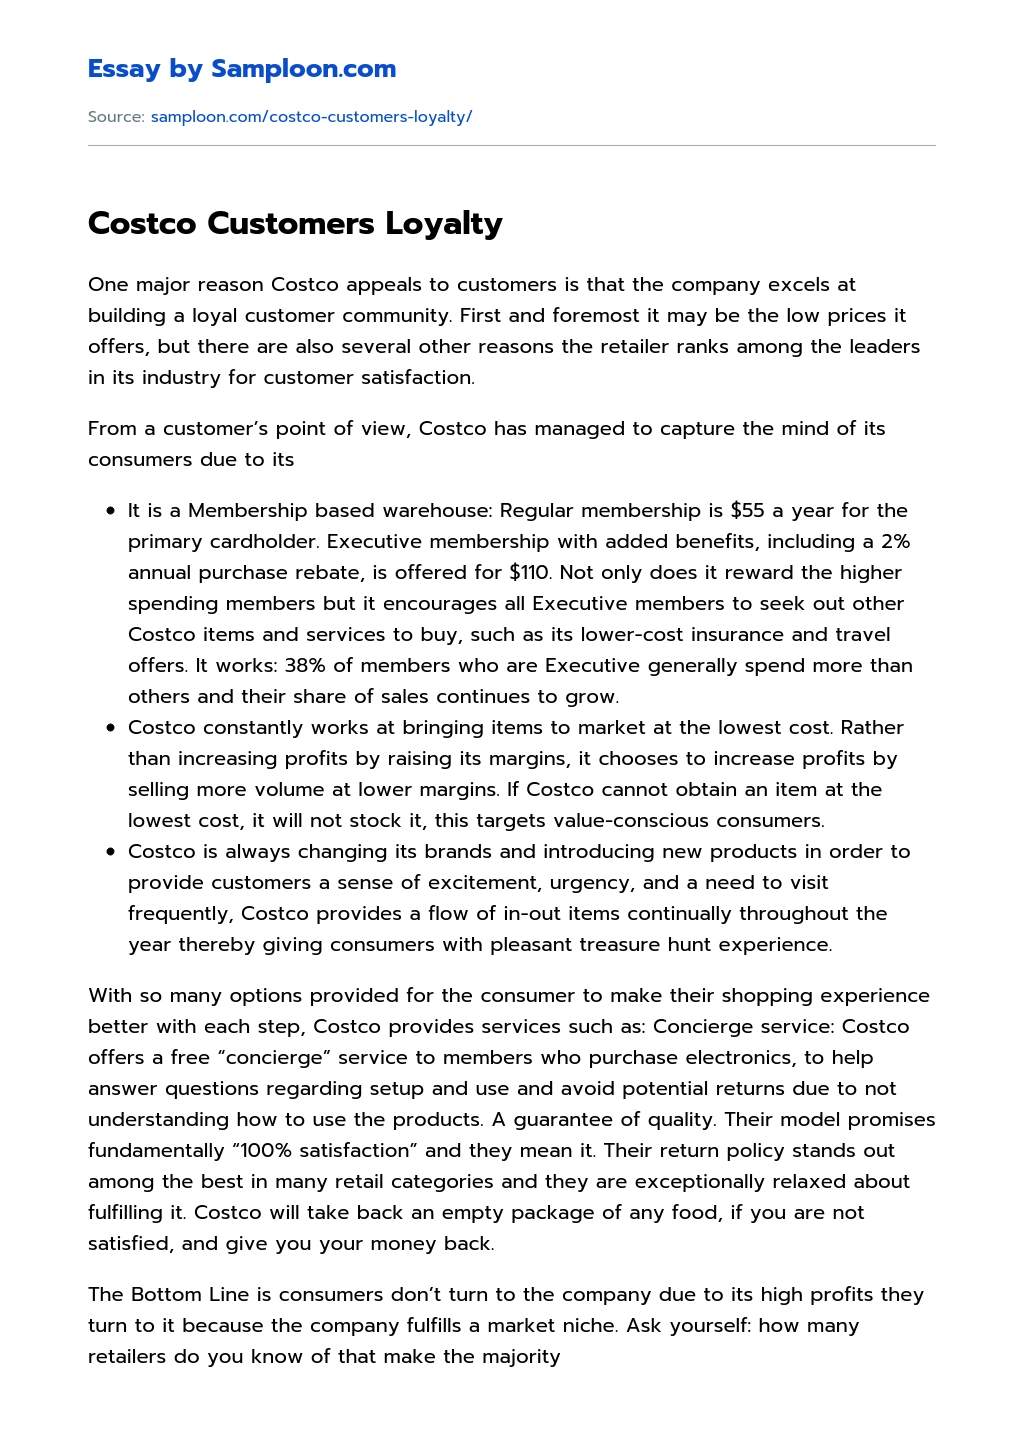 Costco Customers Loyalty essay